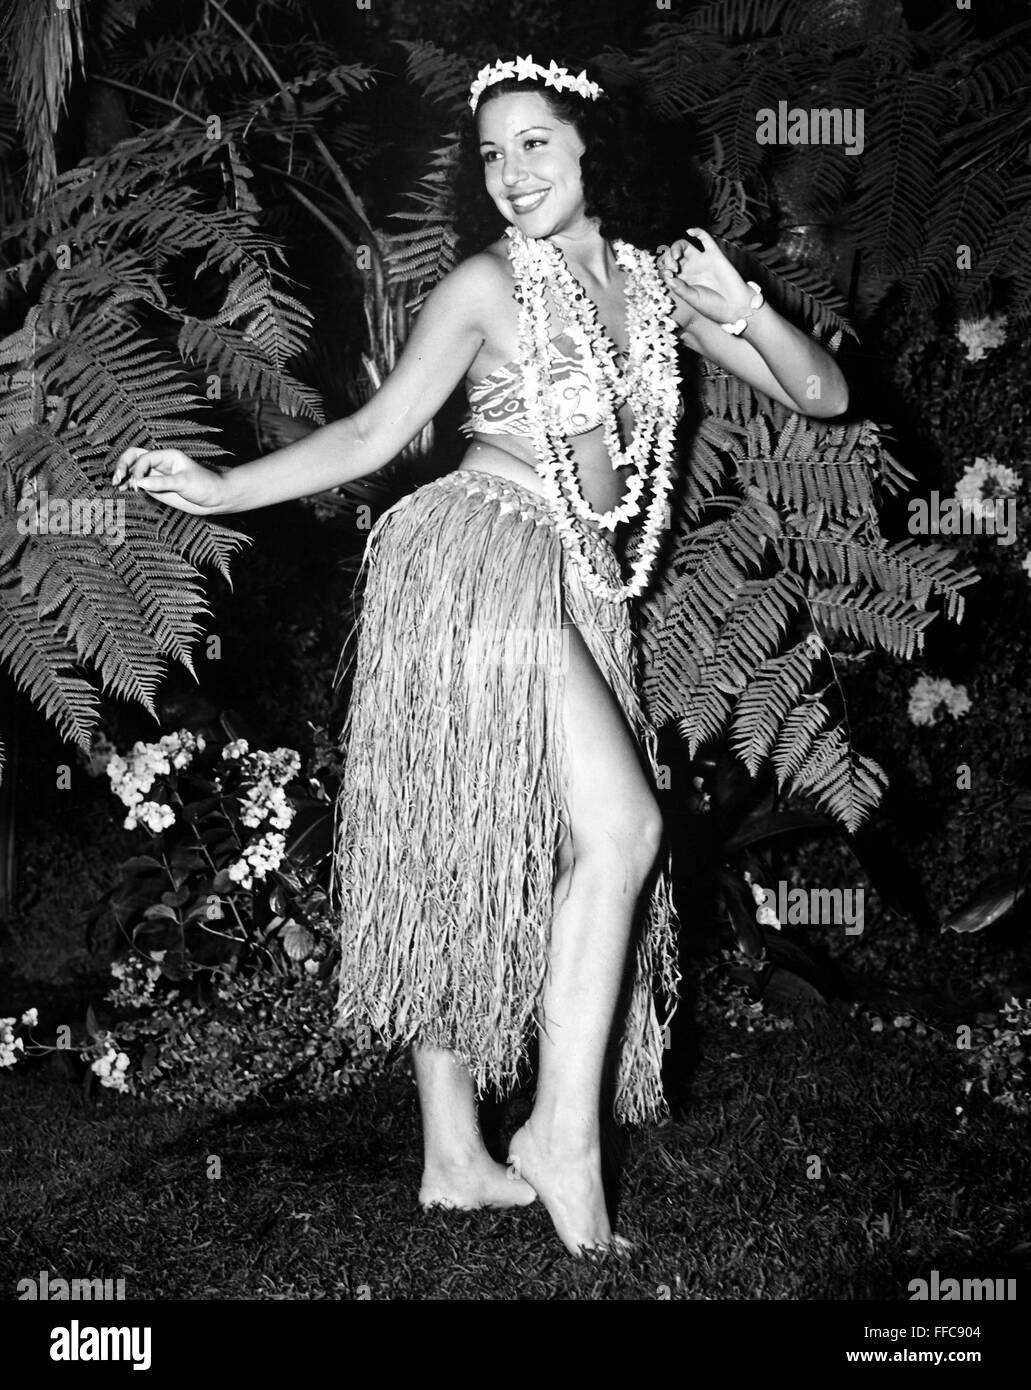 HULA DANCER, 20th CENTURY. /nPrincess Luana dancing the 'swing hula,' mid-20th century. Stock Photo